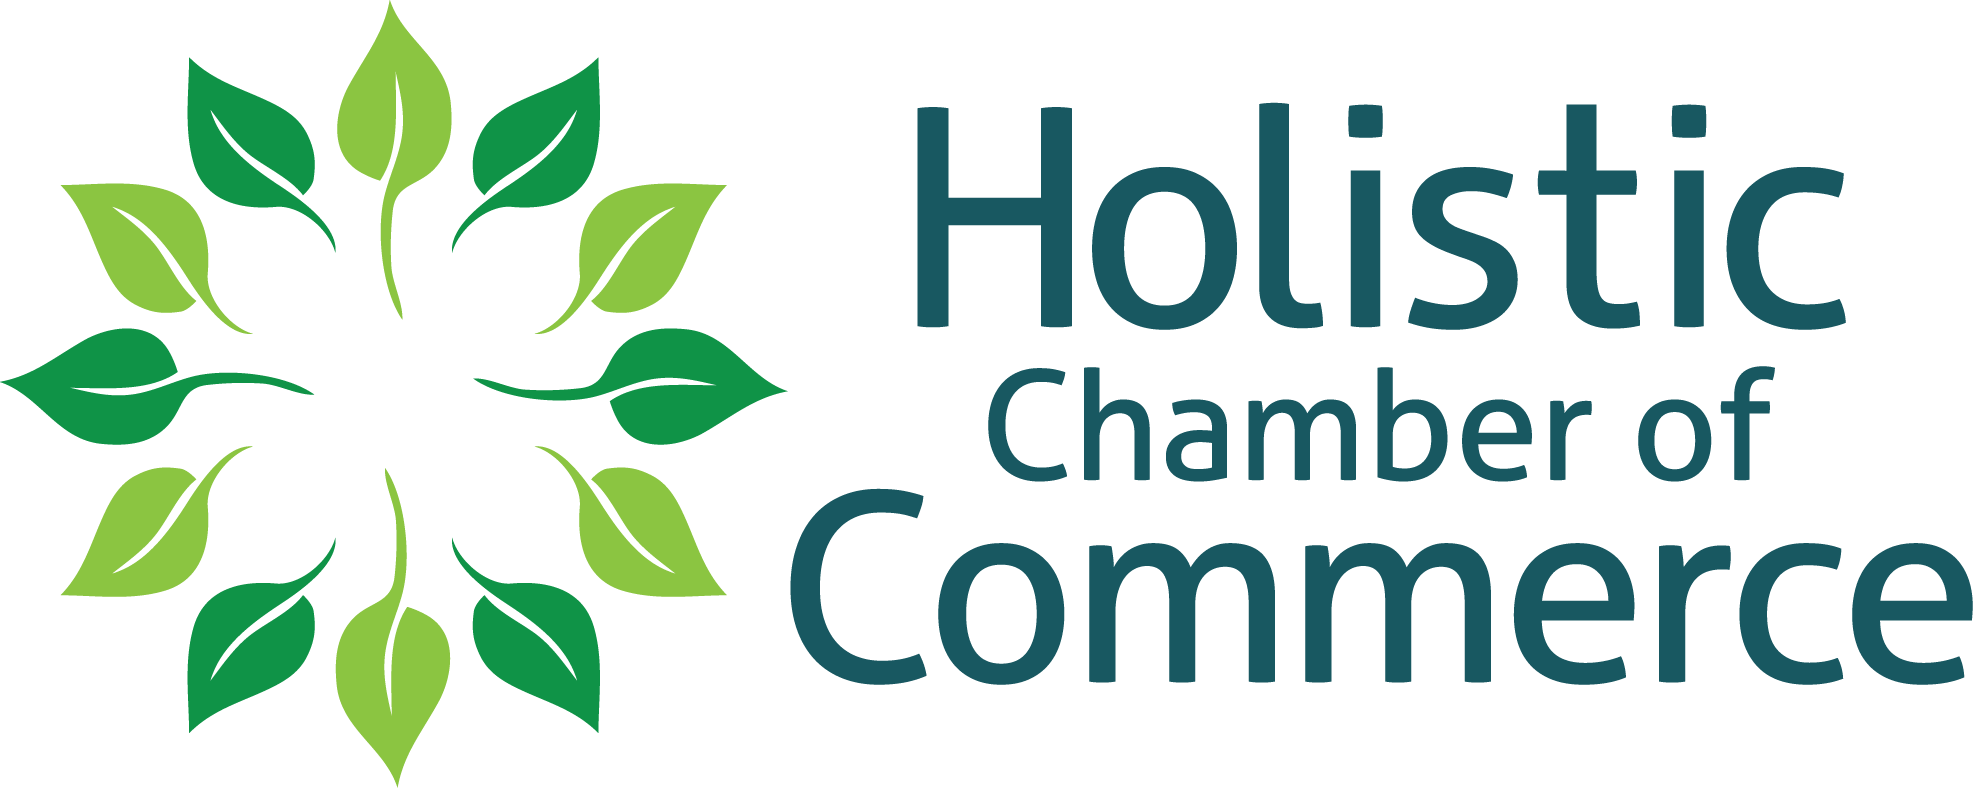 HCC logo